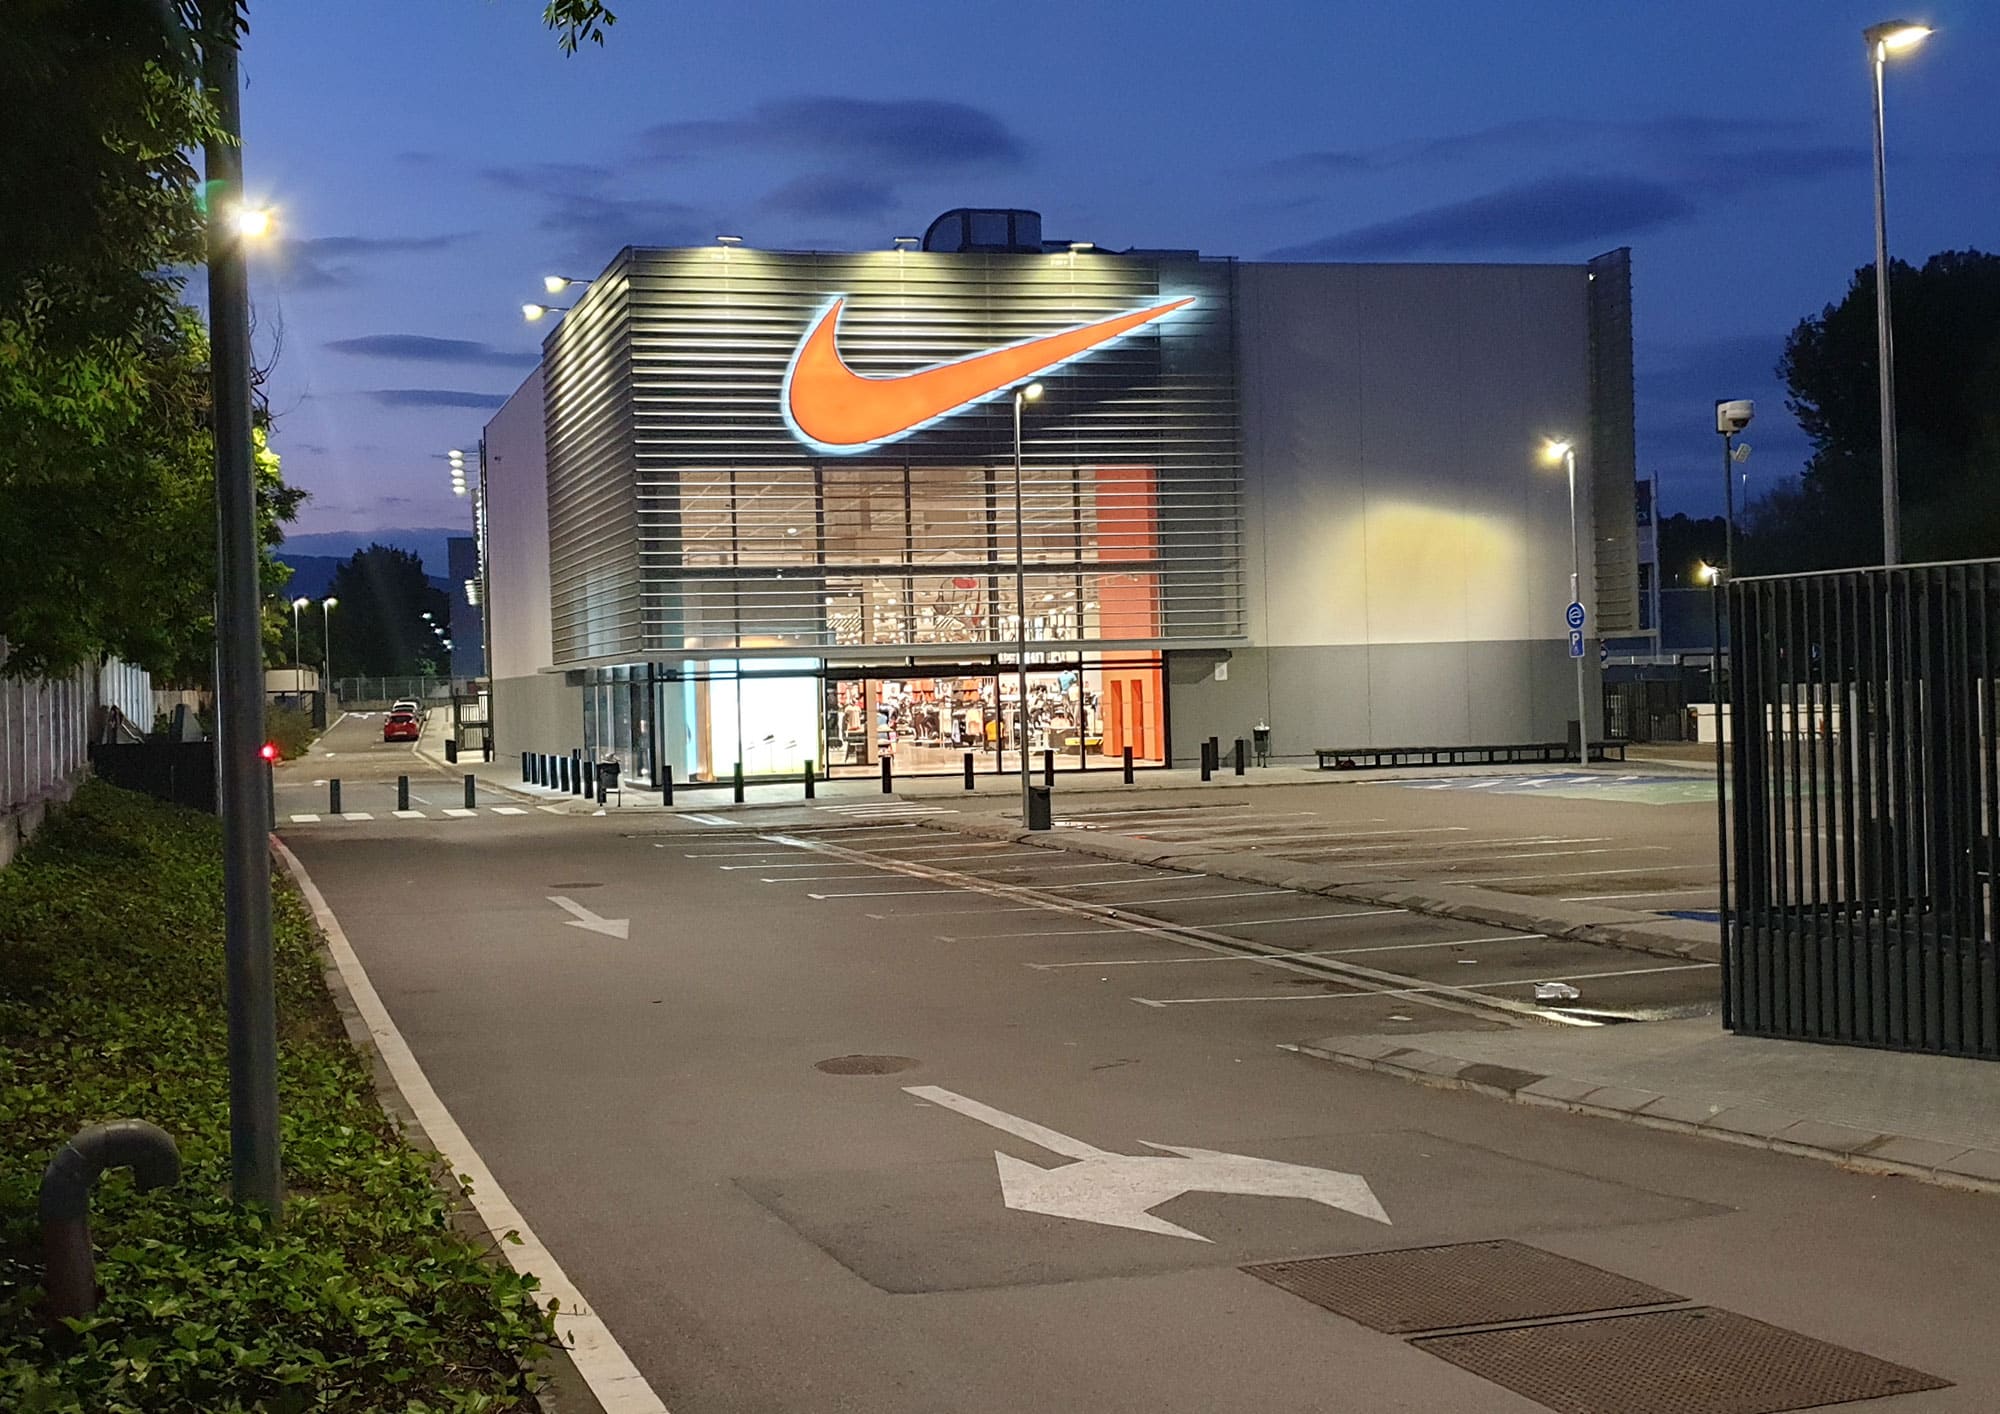 Burlas dueño Copiar Factory Nike La Roca Hotsell, 52% OFF | eaob.eu